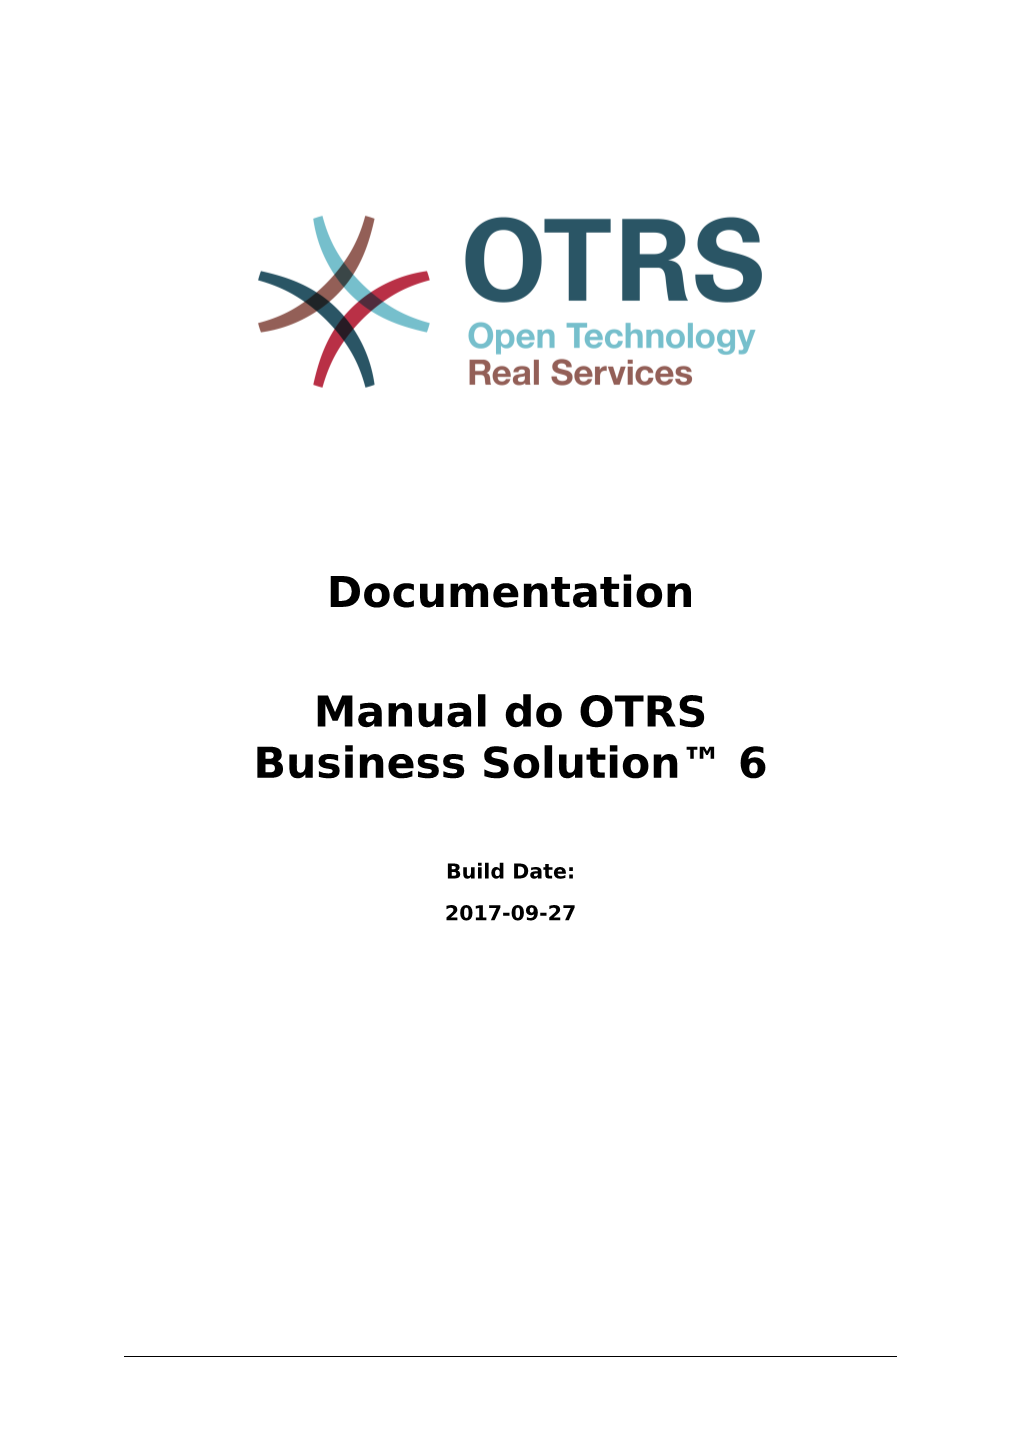 Documentation Manual Do OTRS Business Solution™ 6